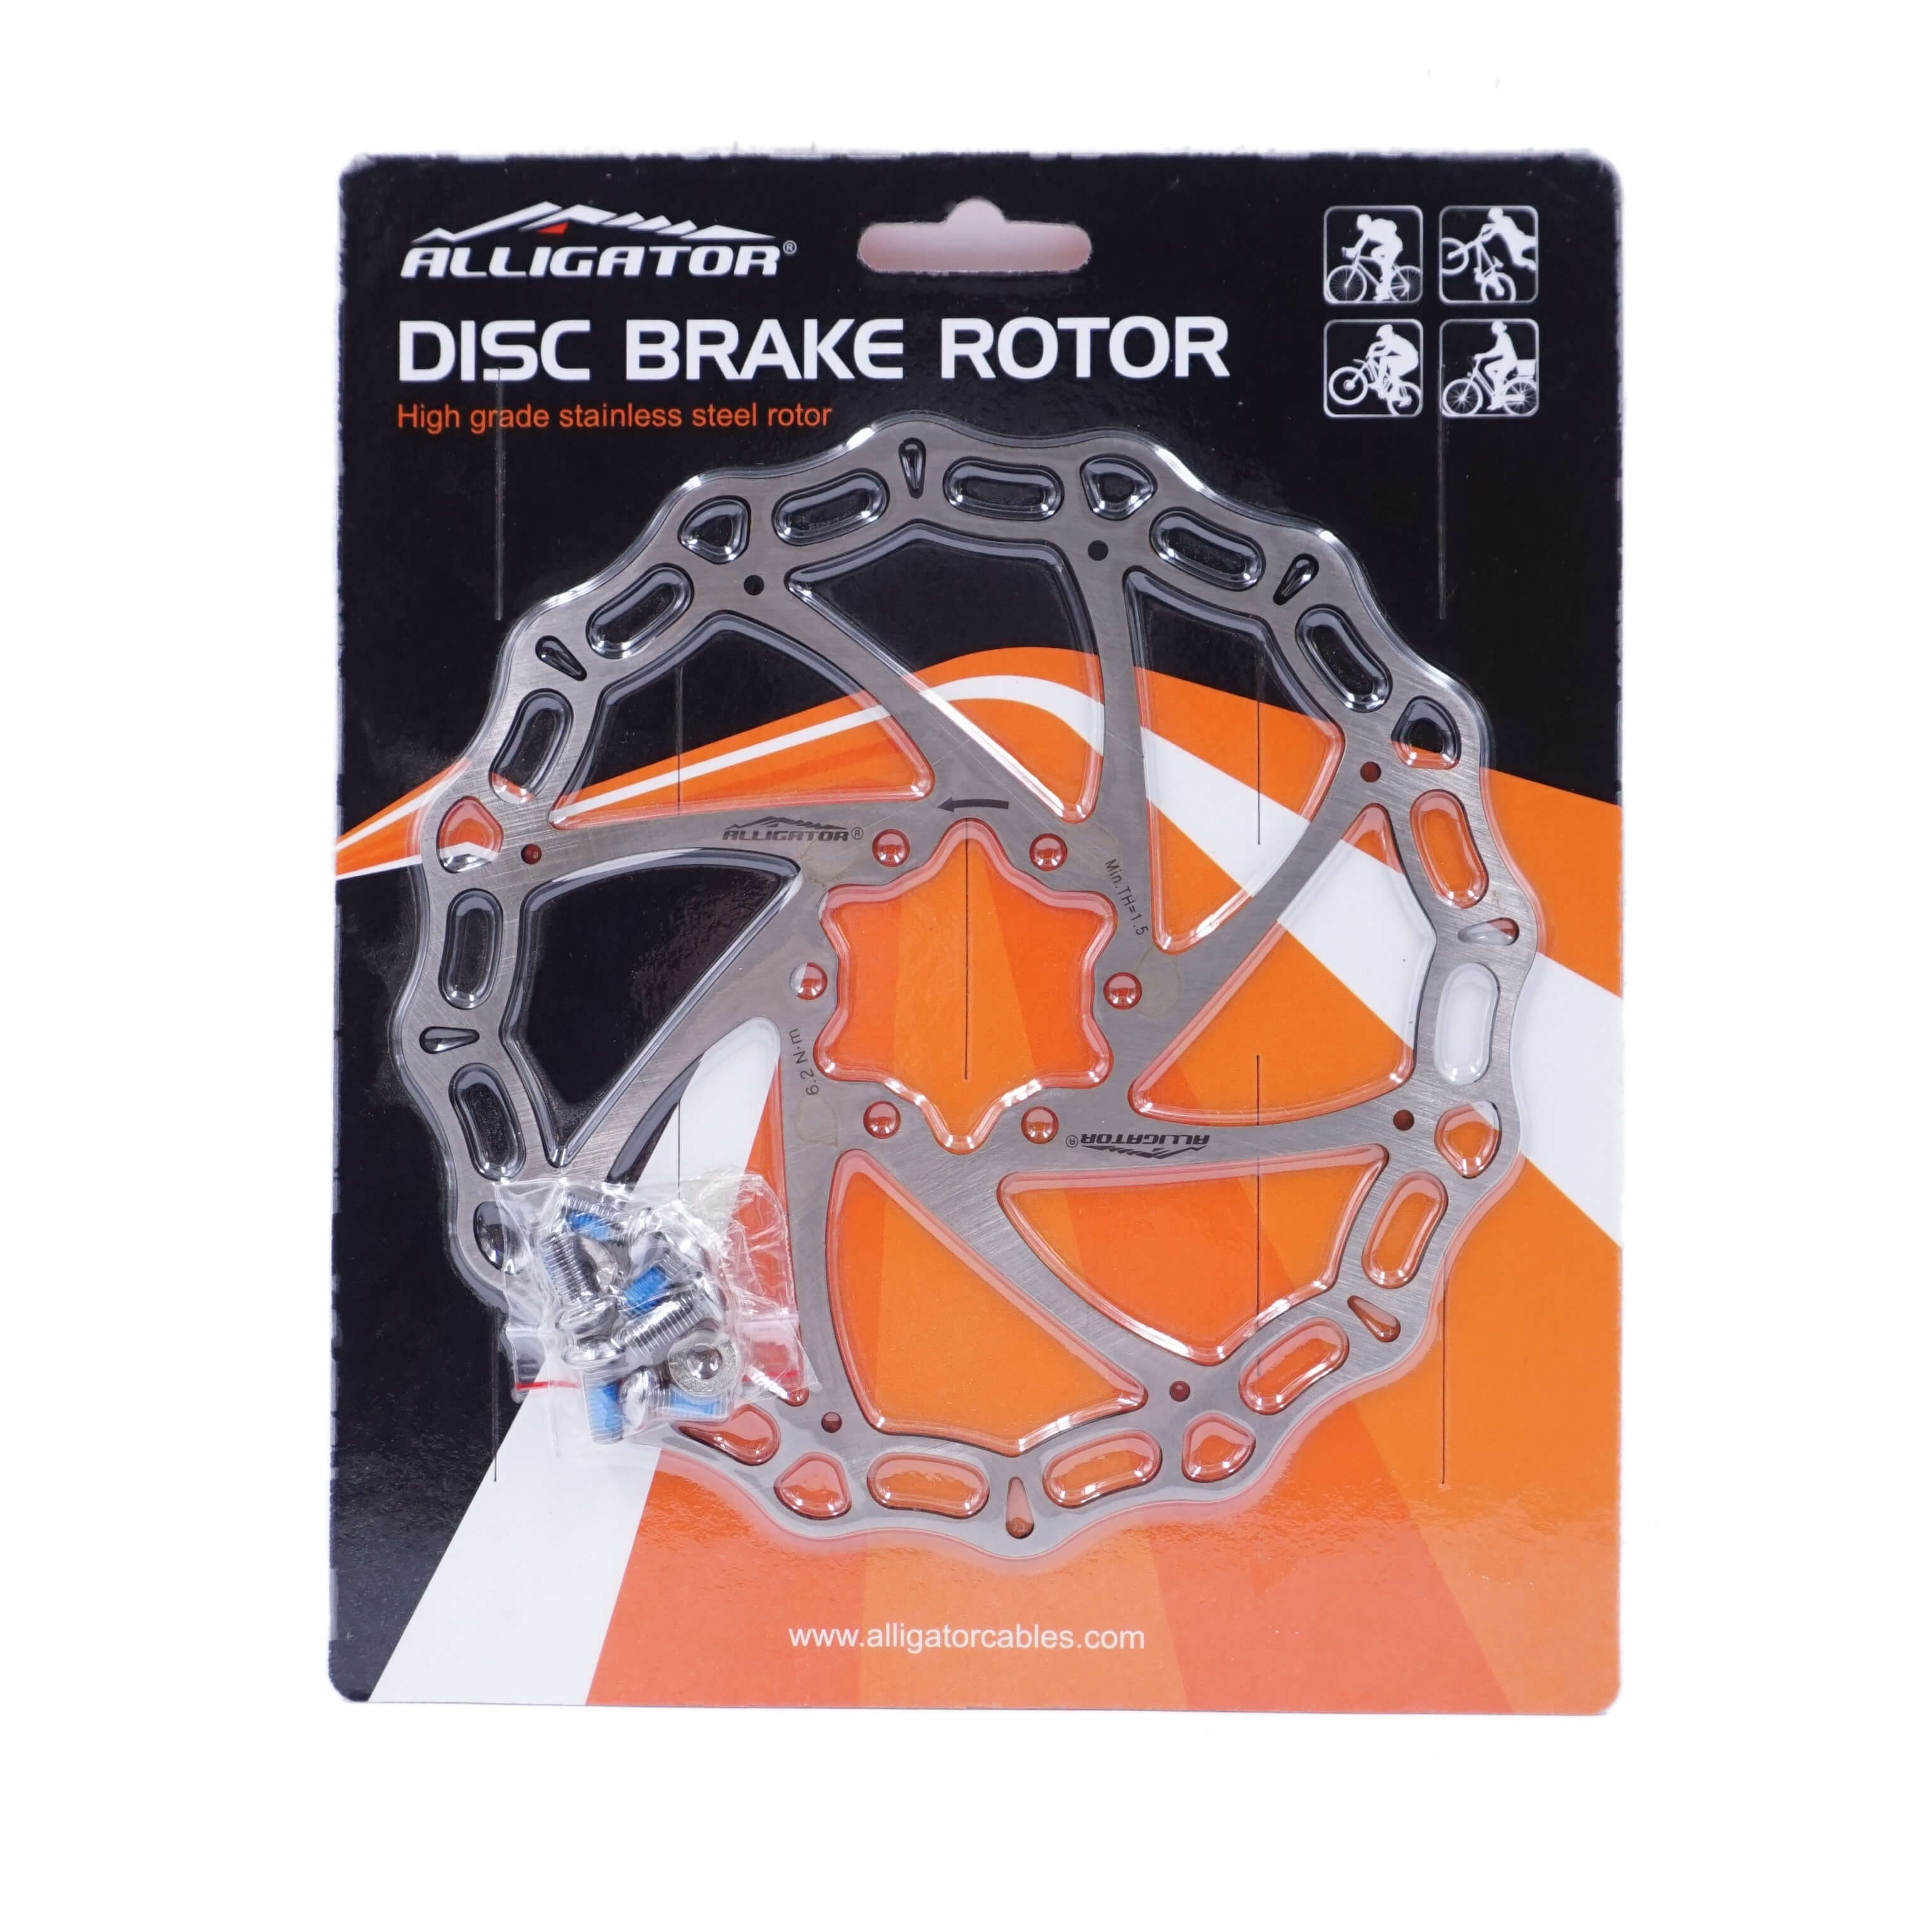 Alligator Crown Disc Brake Rotor 6-bolt - The Bikesmiths